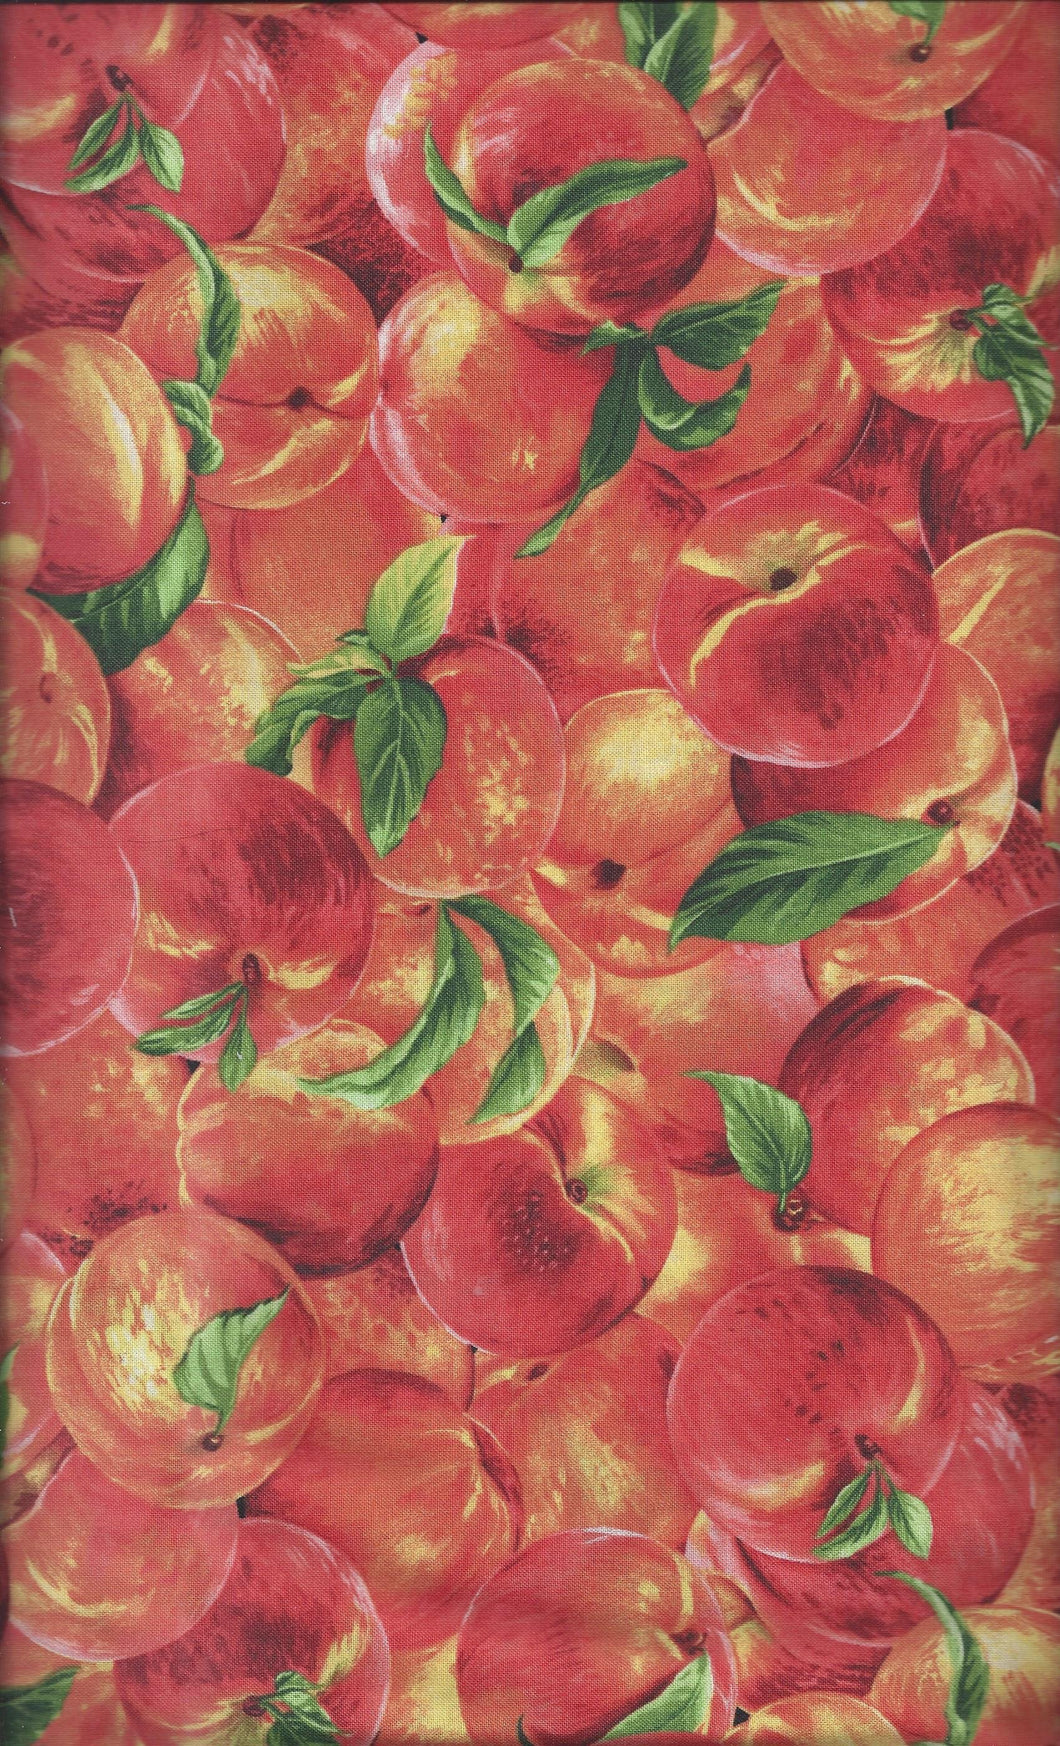 Farmer John's Organic Peaches ed506